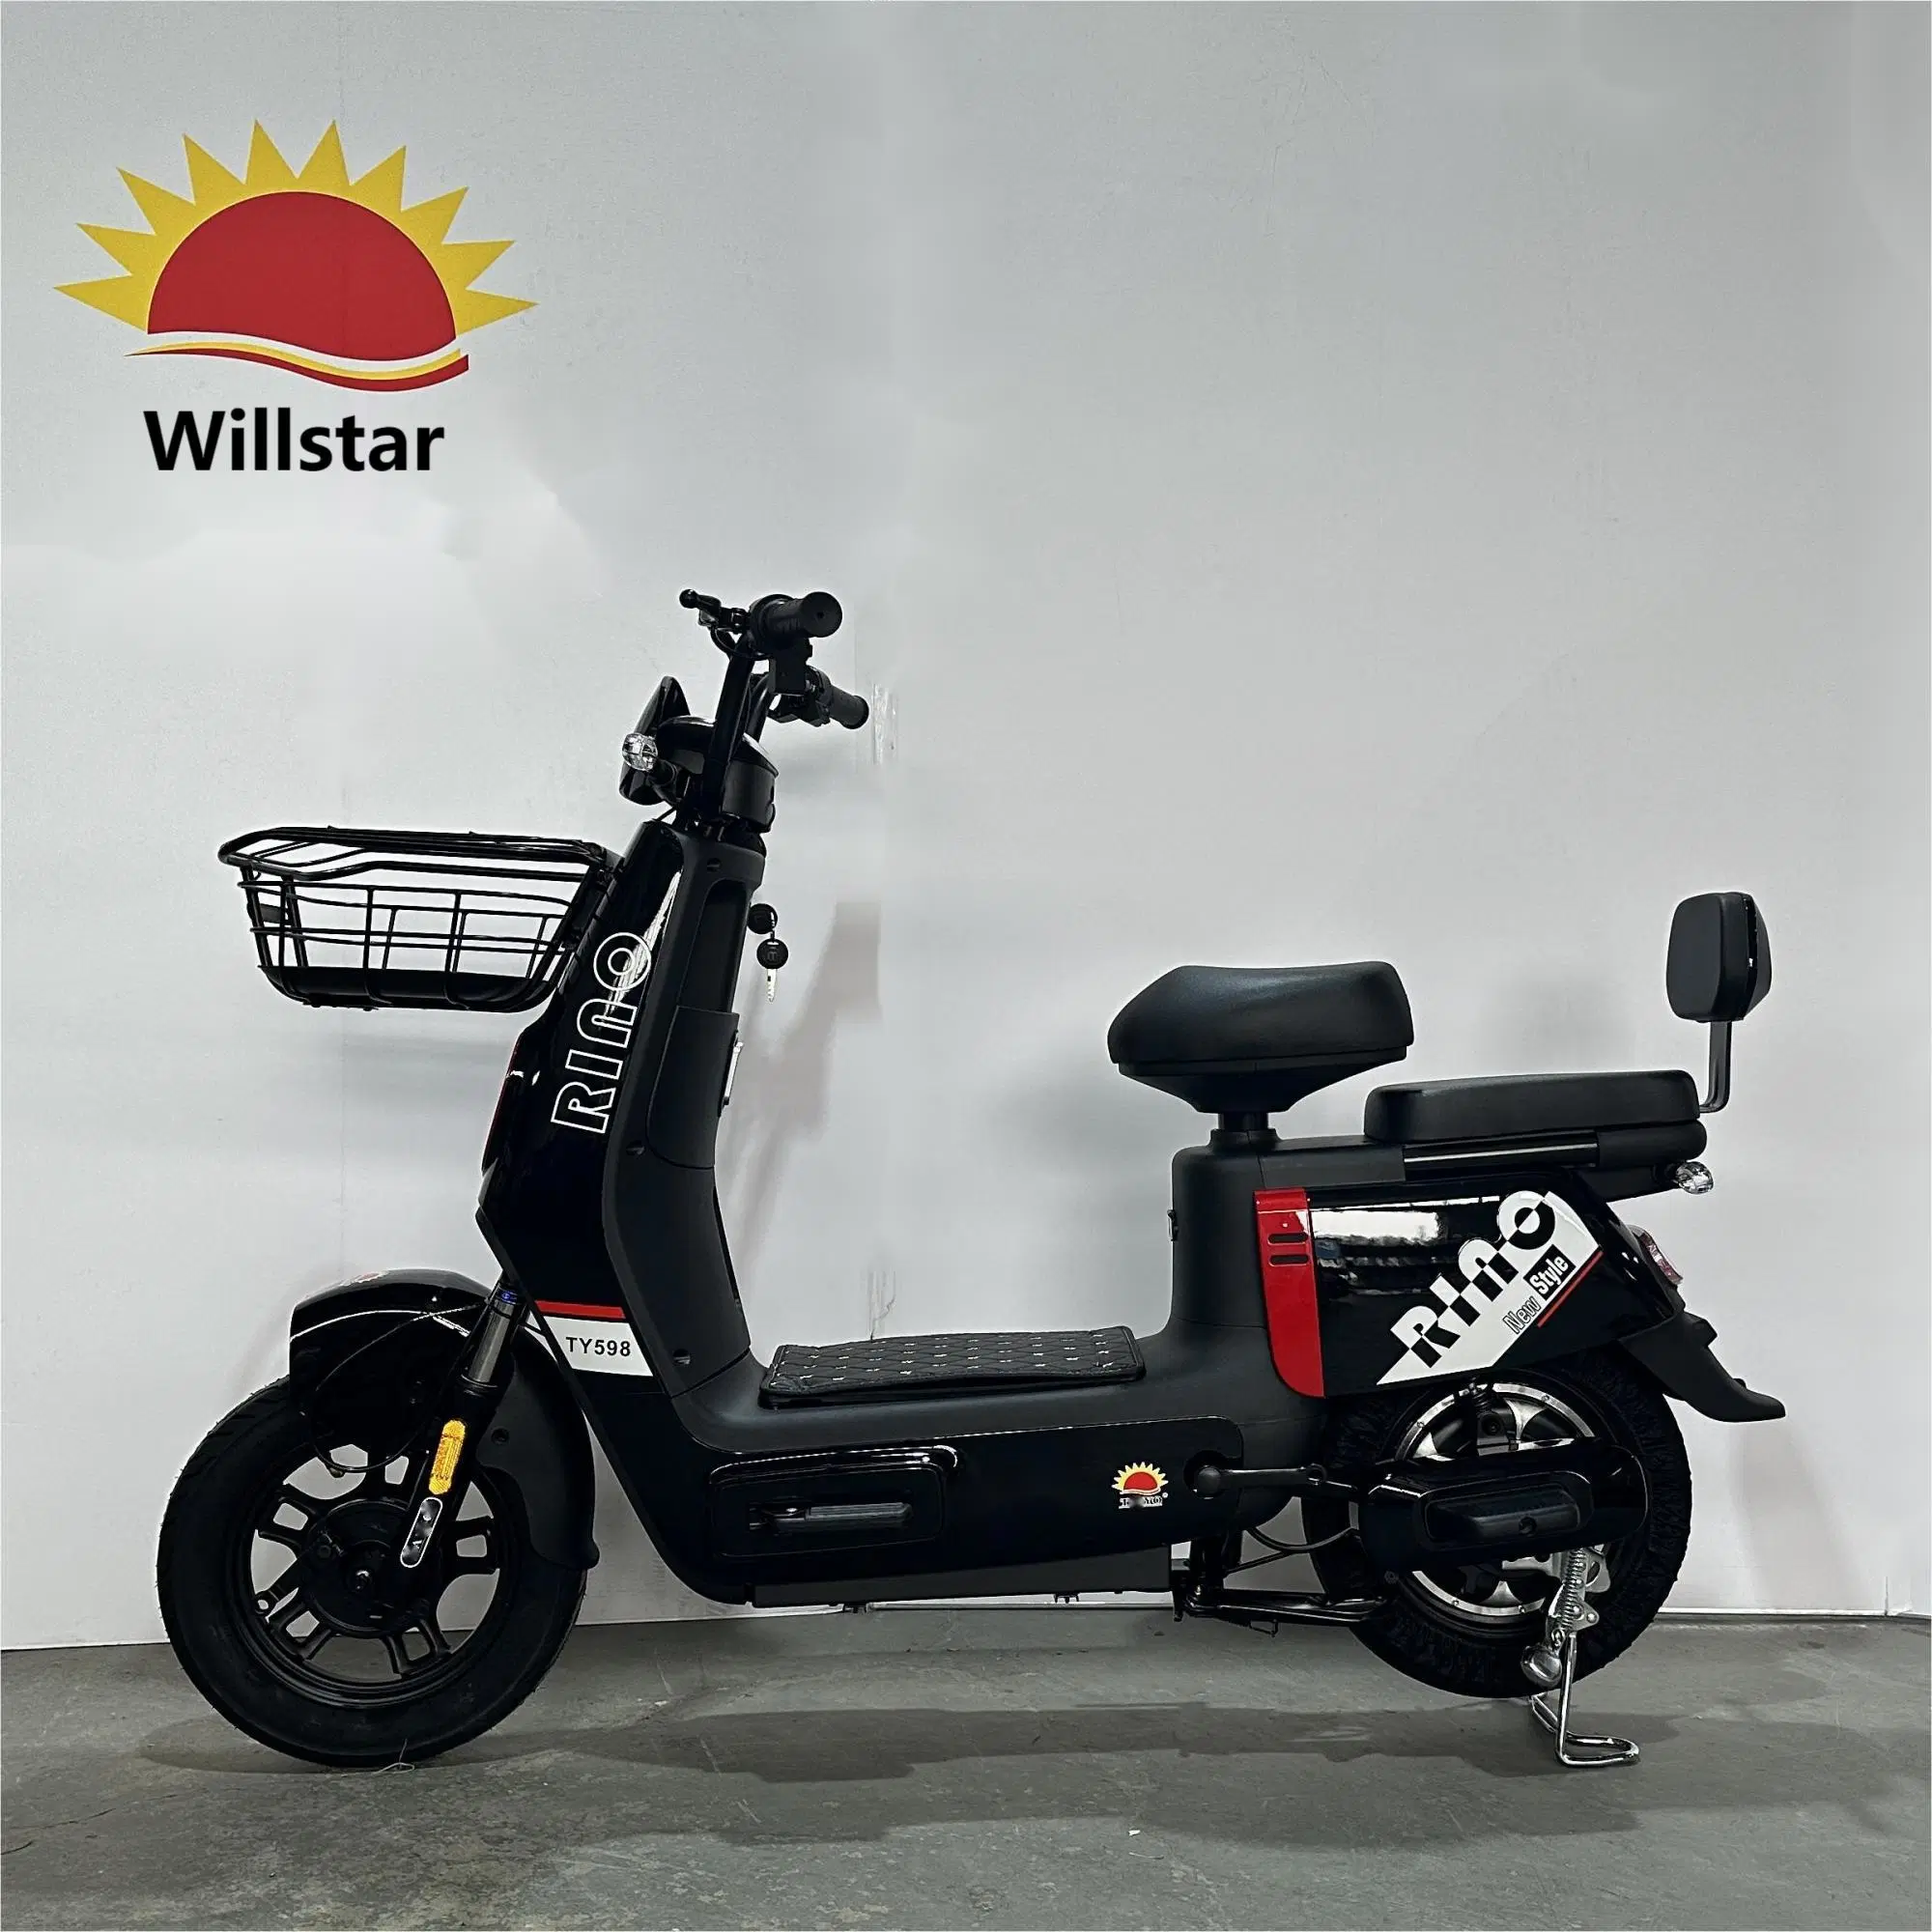 Willstar Electric Bike Ty598 с Chilwee или Tianneng свинцово-кислотный аккумулятор 48V12ah Последняя модель